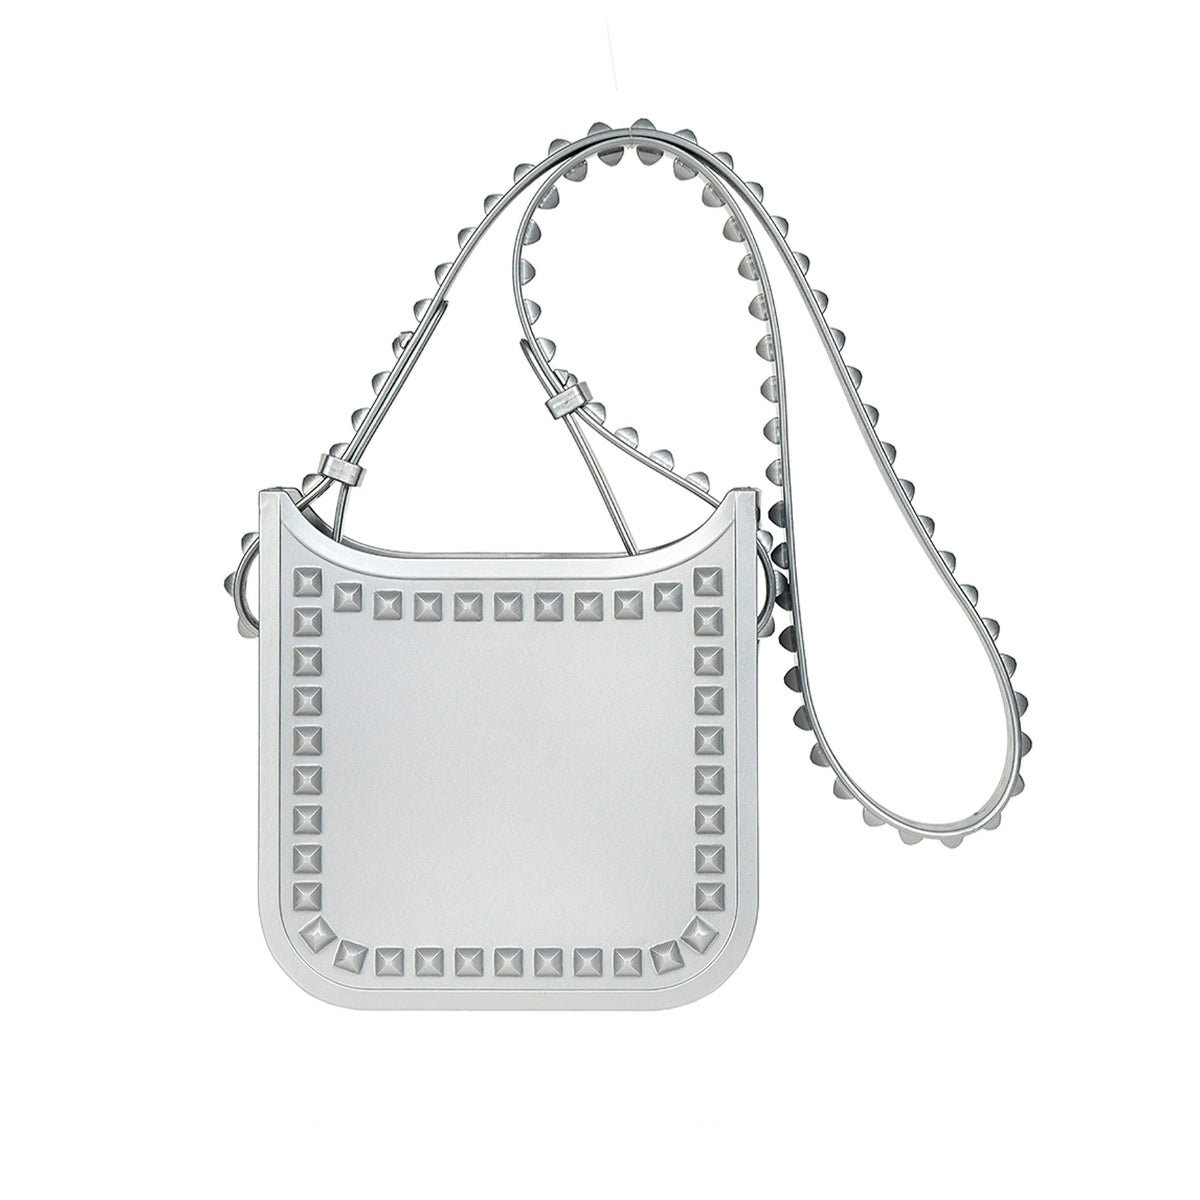 Handsfree Lisa small crossbody purse from Carmen Sol on sale in color silver